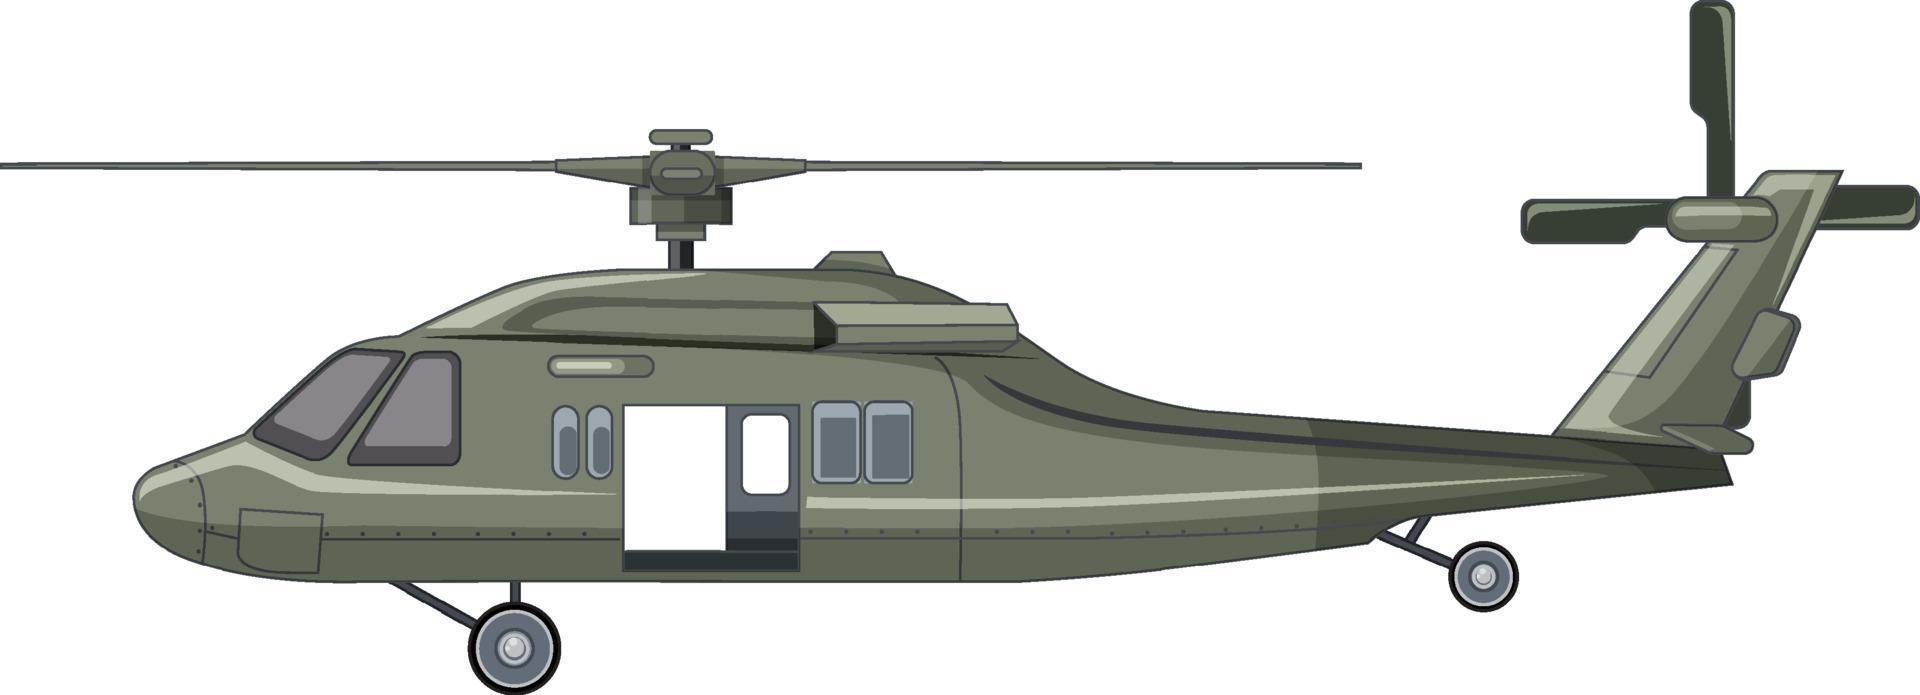 en militärhelikopter på vit bakgrund vektor